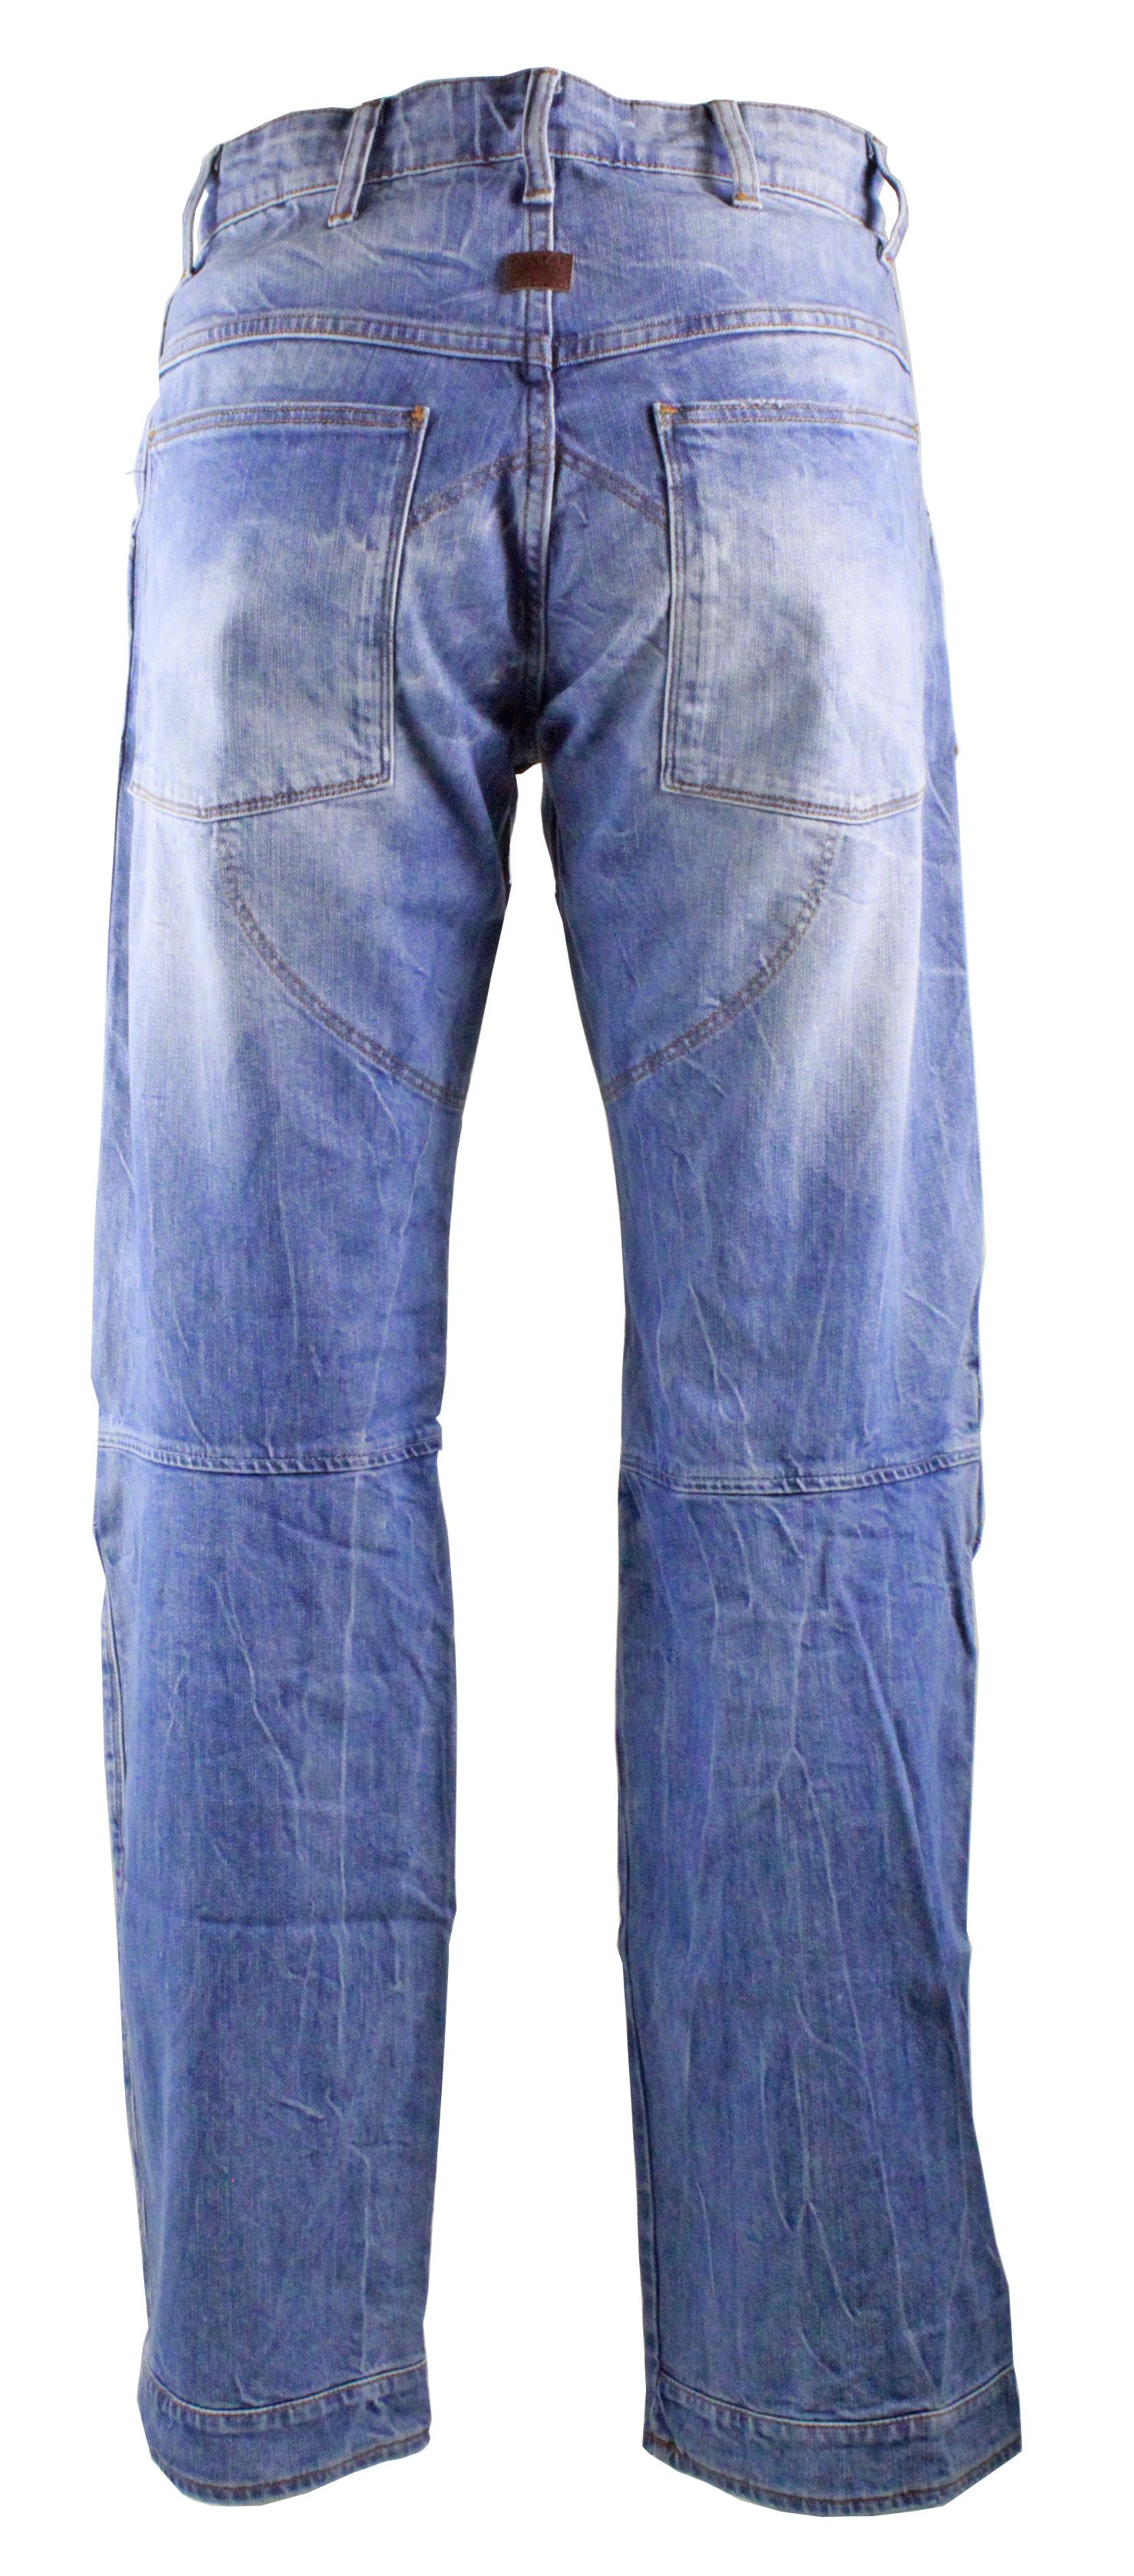 G-Star 5620 3D Stretch Med Aged  Hadron Stretch Denim Jeans. 98% Cotton 2% Elastane Stretch Denim. G-Star Elwood Style. Tapered Leg. Button Fly. Additional Hems